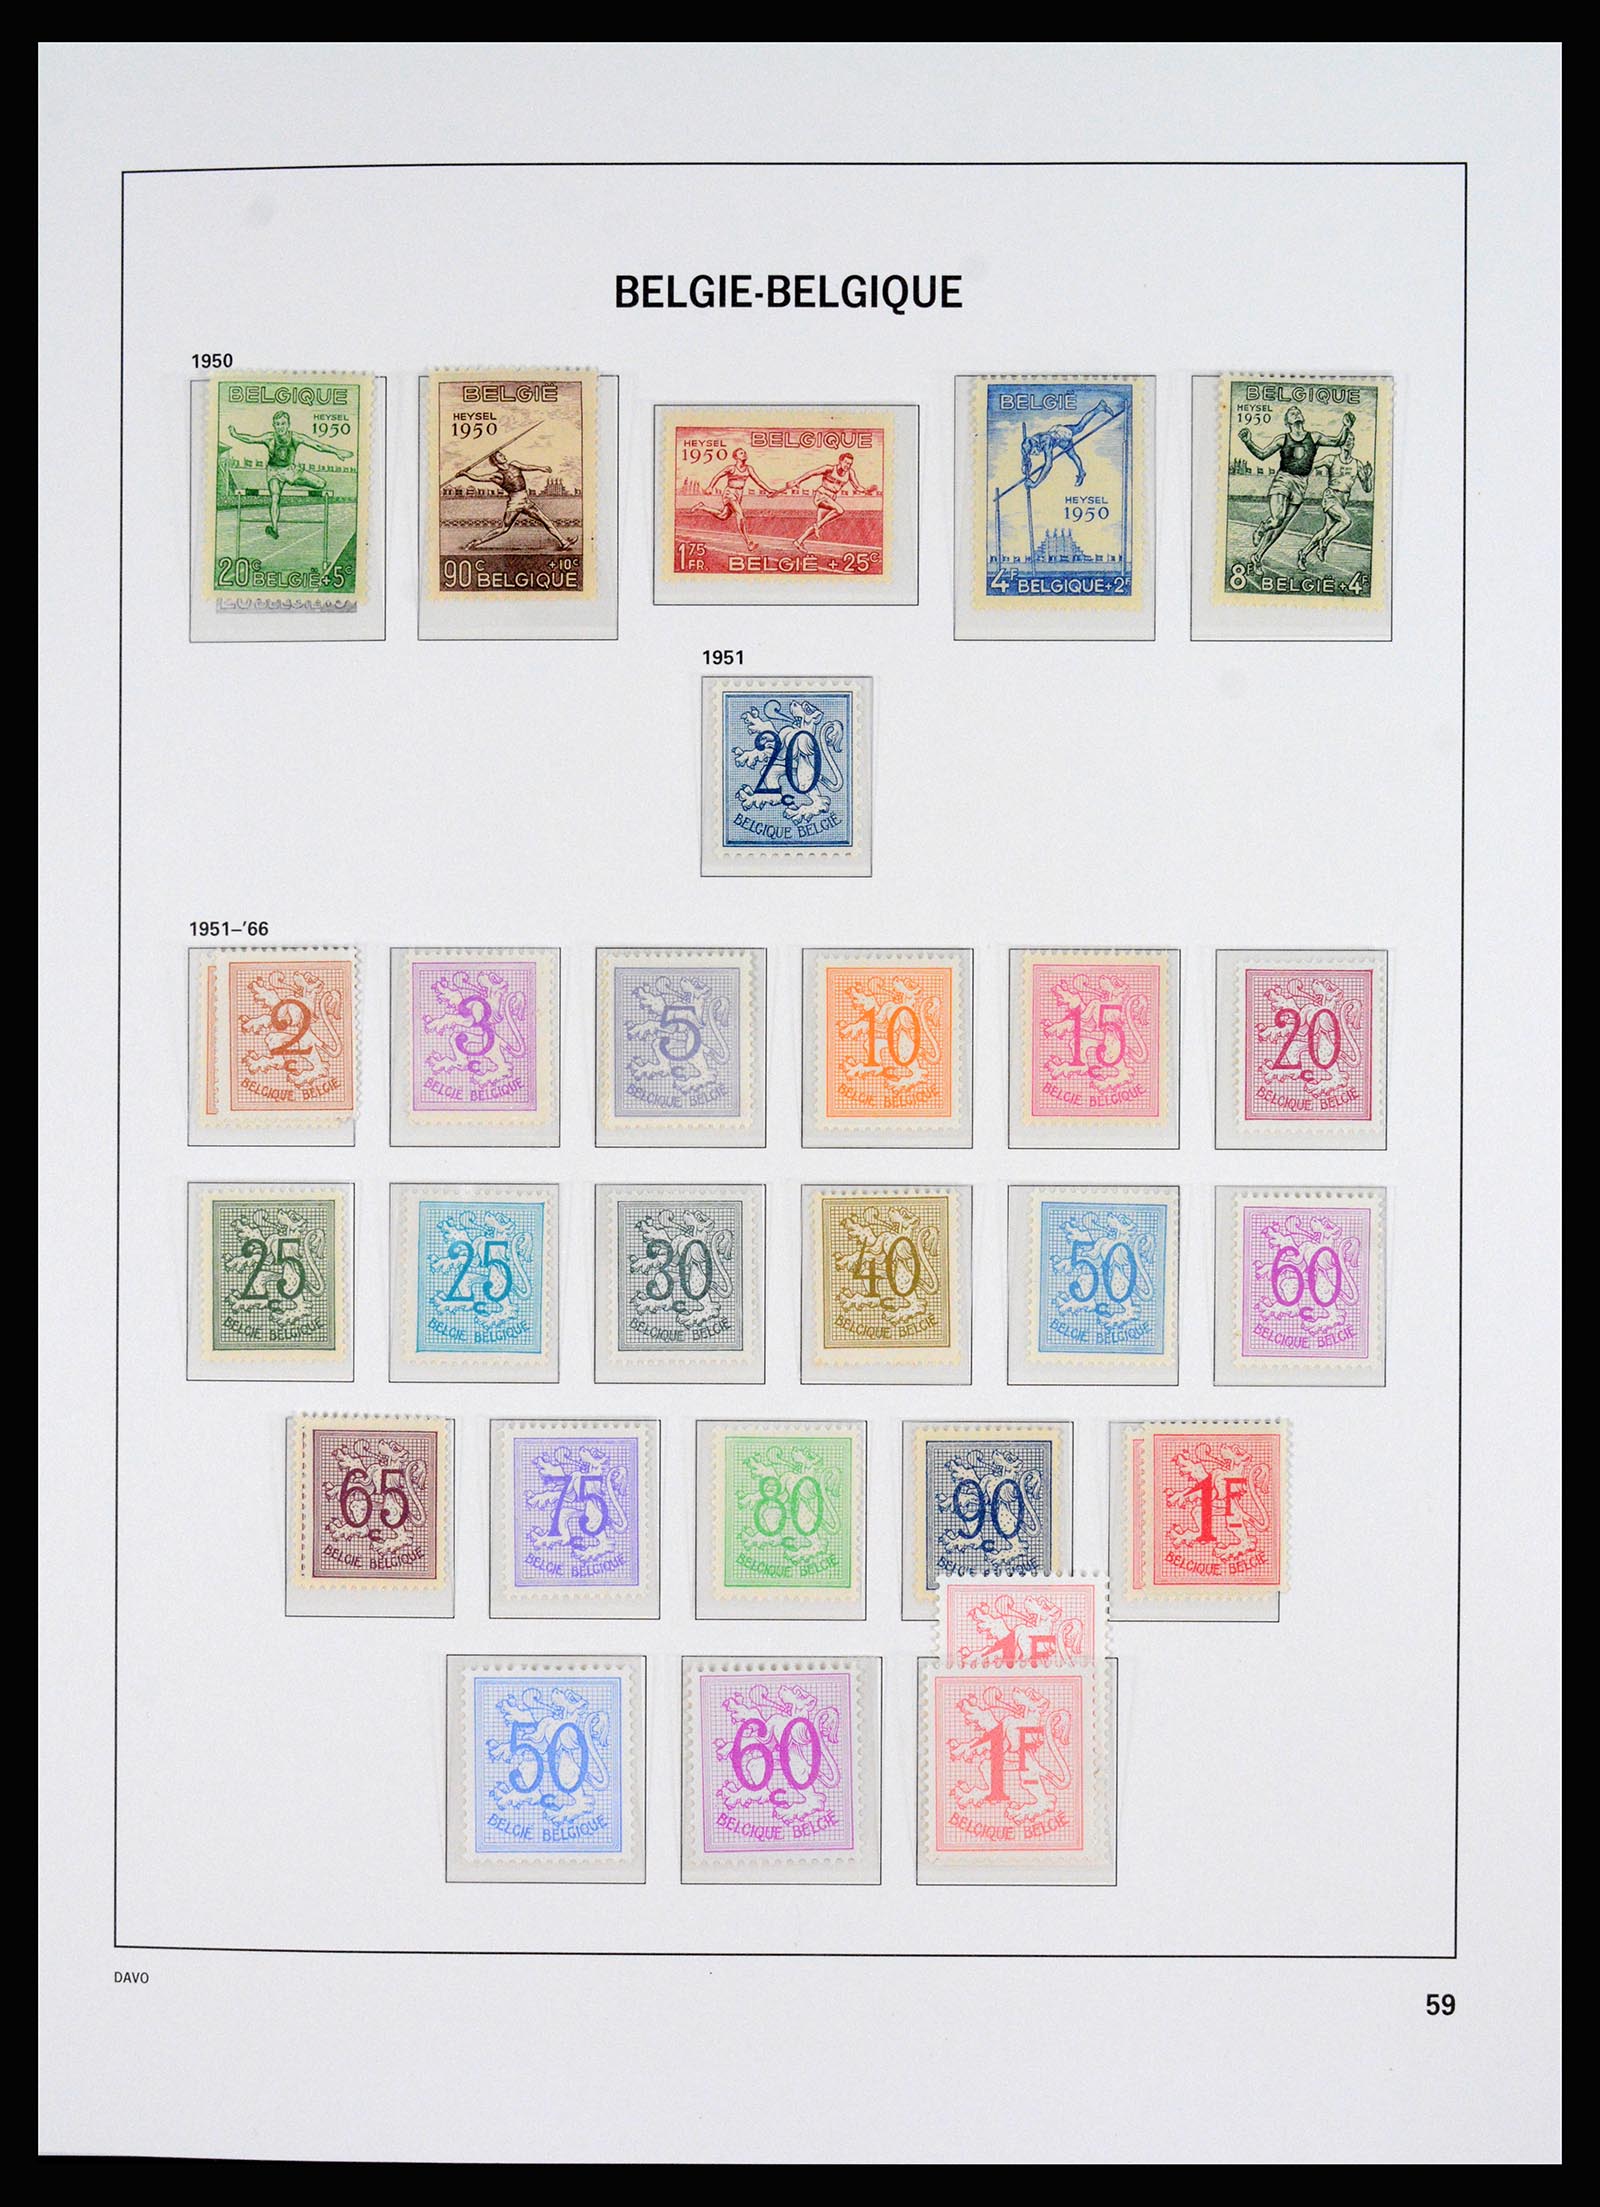 37179 002 - Stamp collection 37179 Belgium 1949-2000.